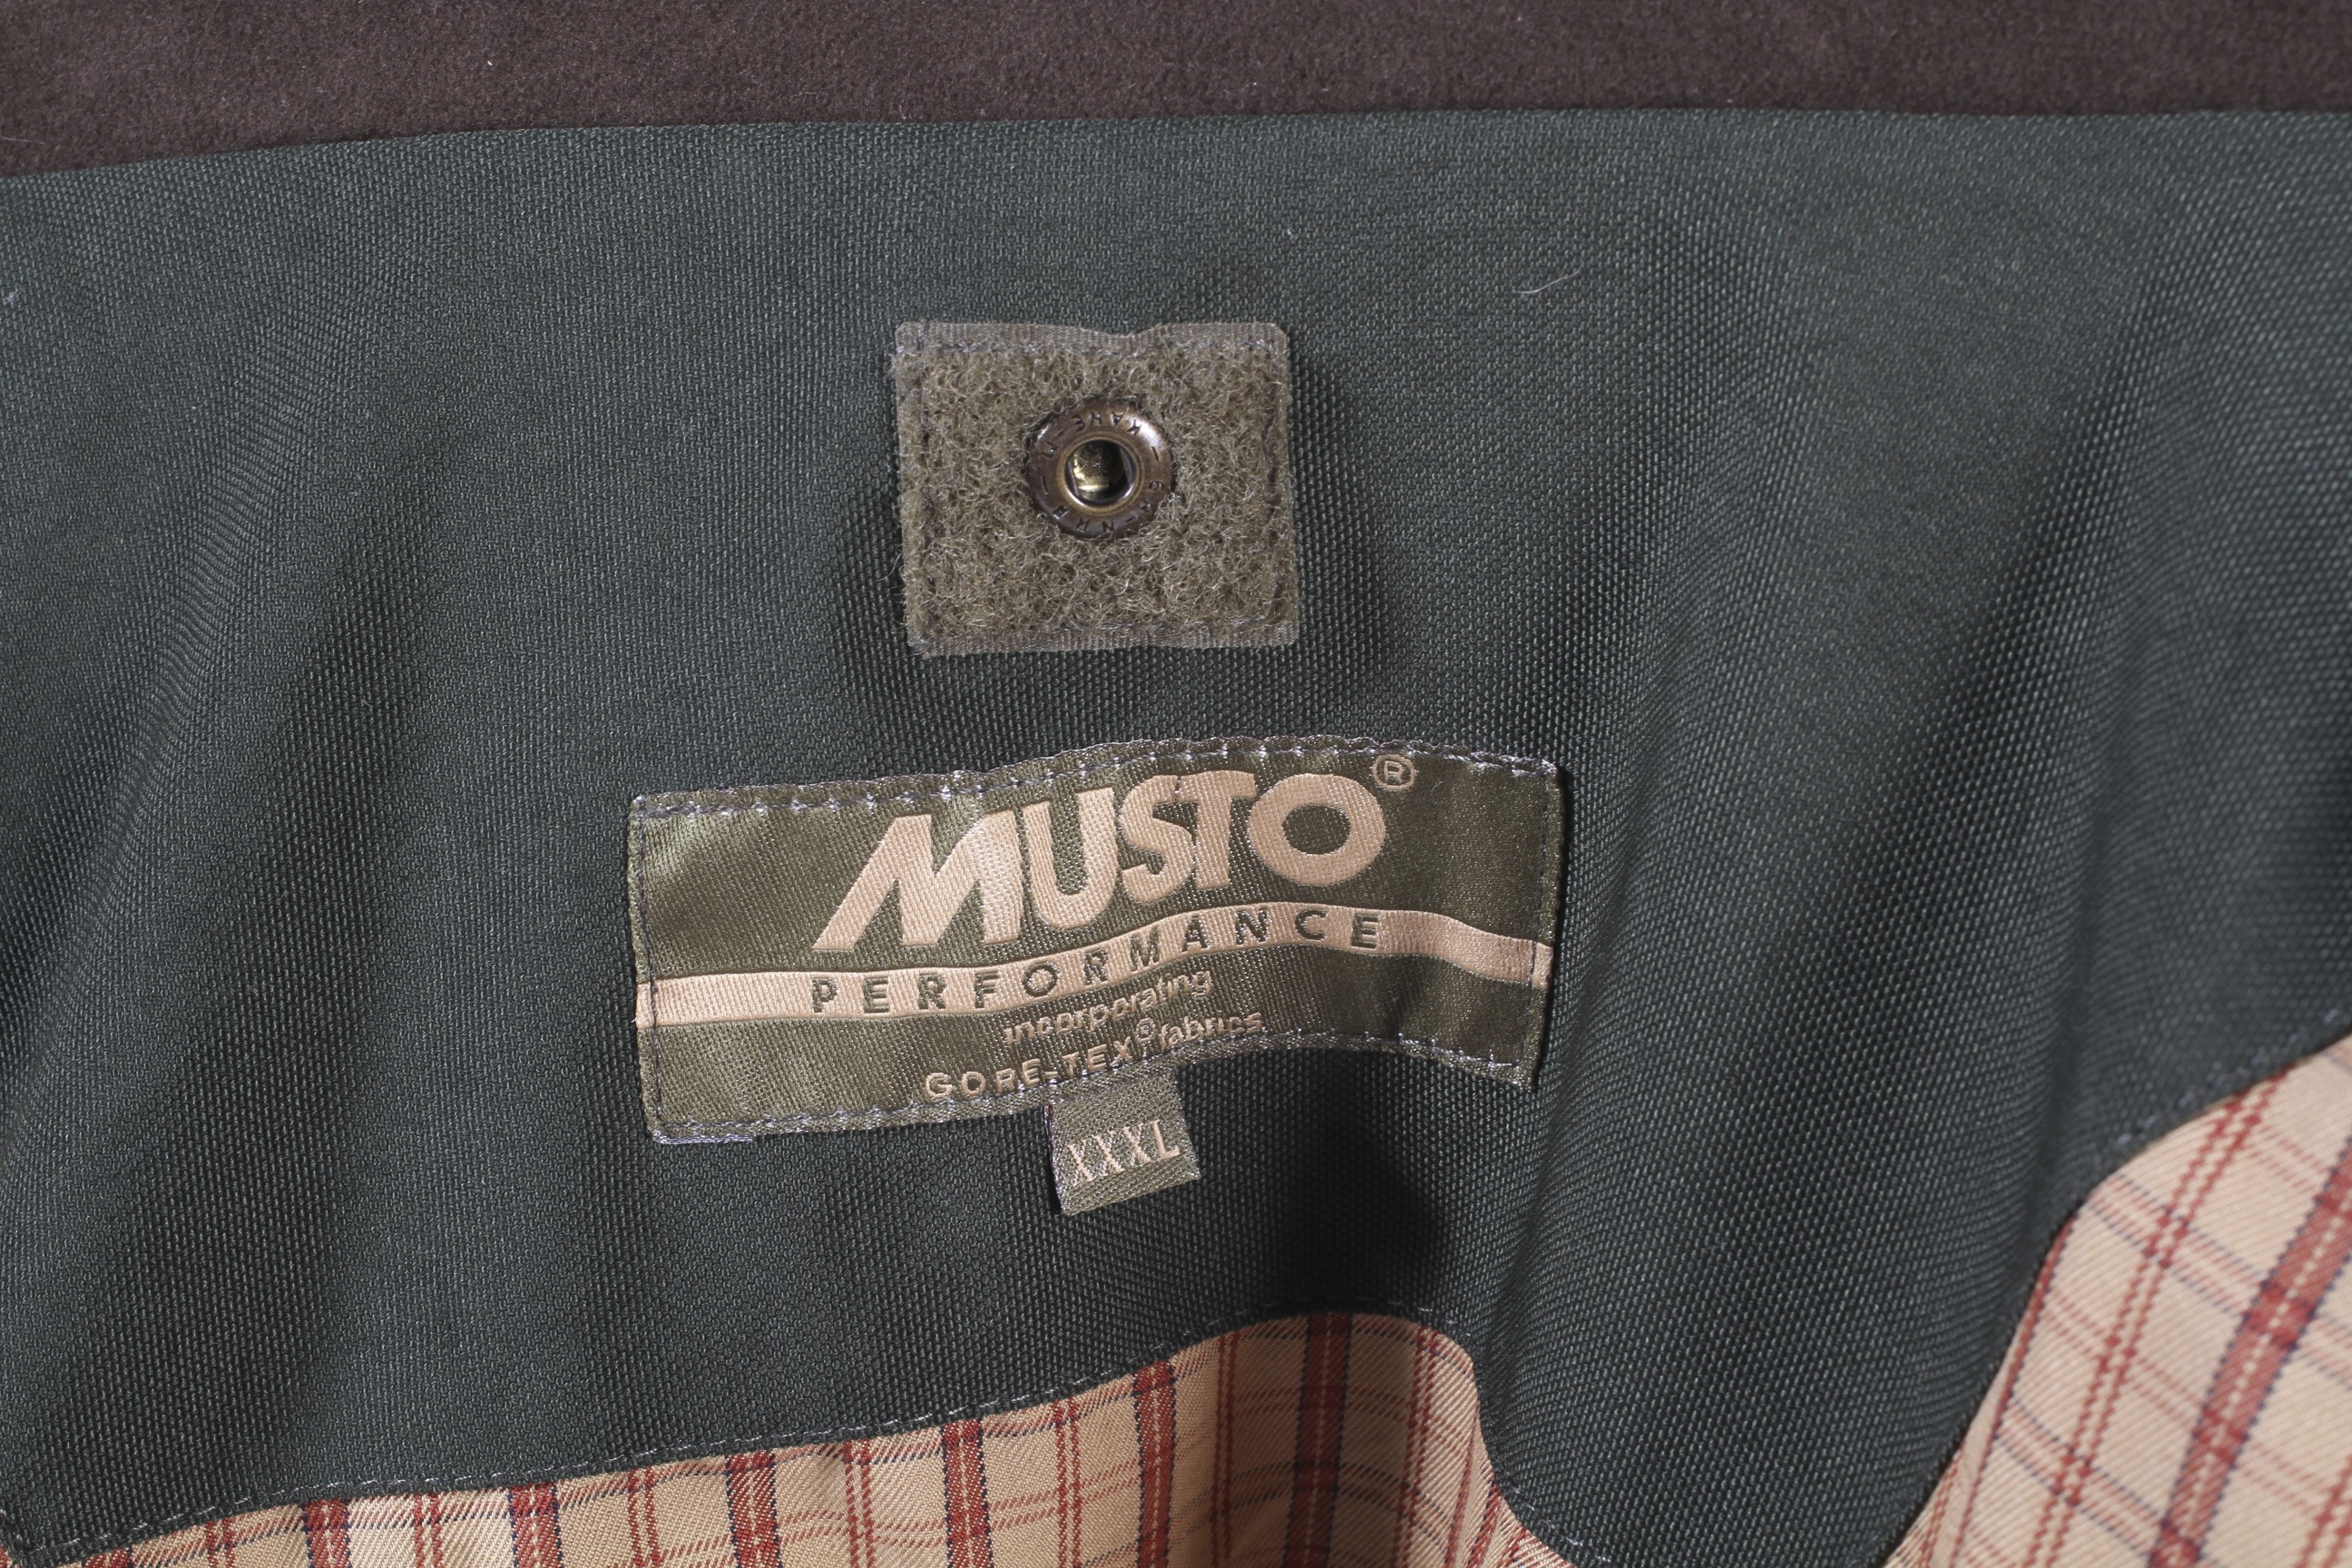 A Musto Performance gortex jacket. - Image 3 of 4